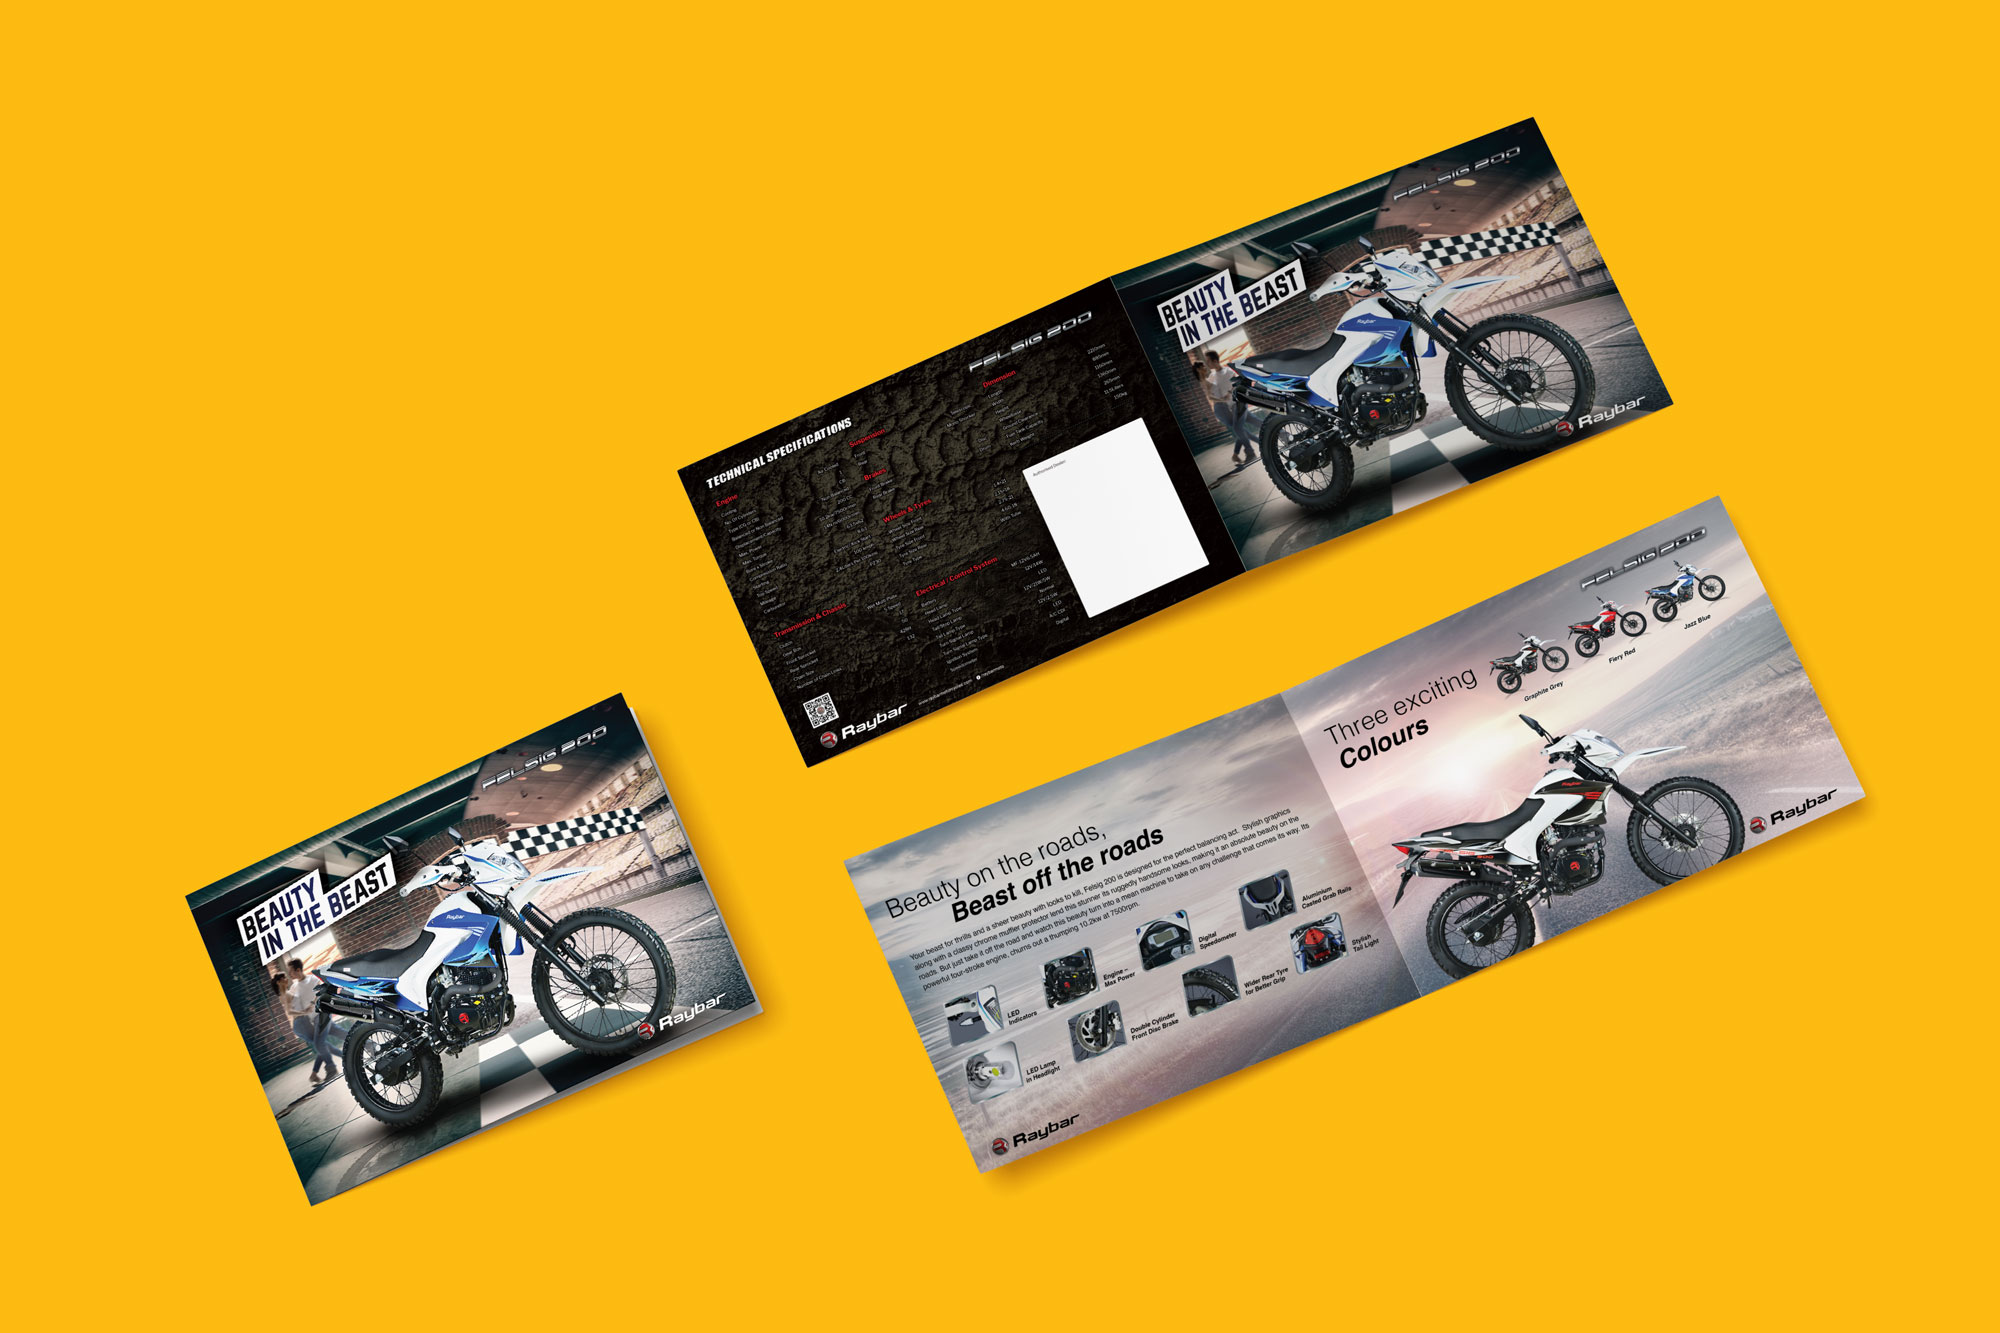 Raybar- Felsign 200 Bike Brochure